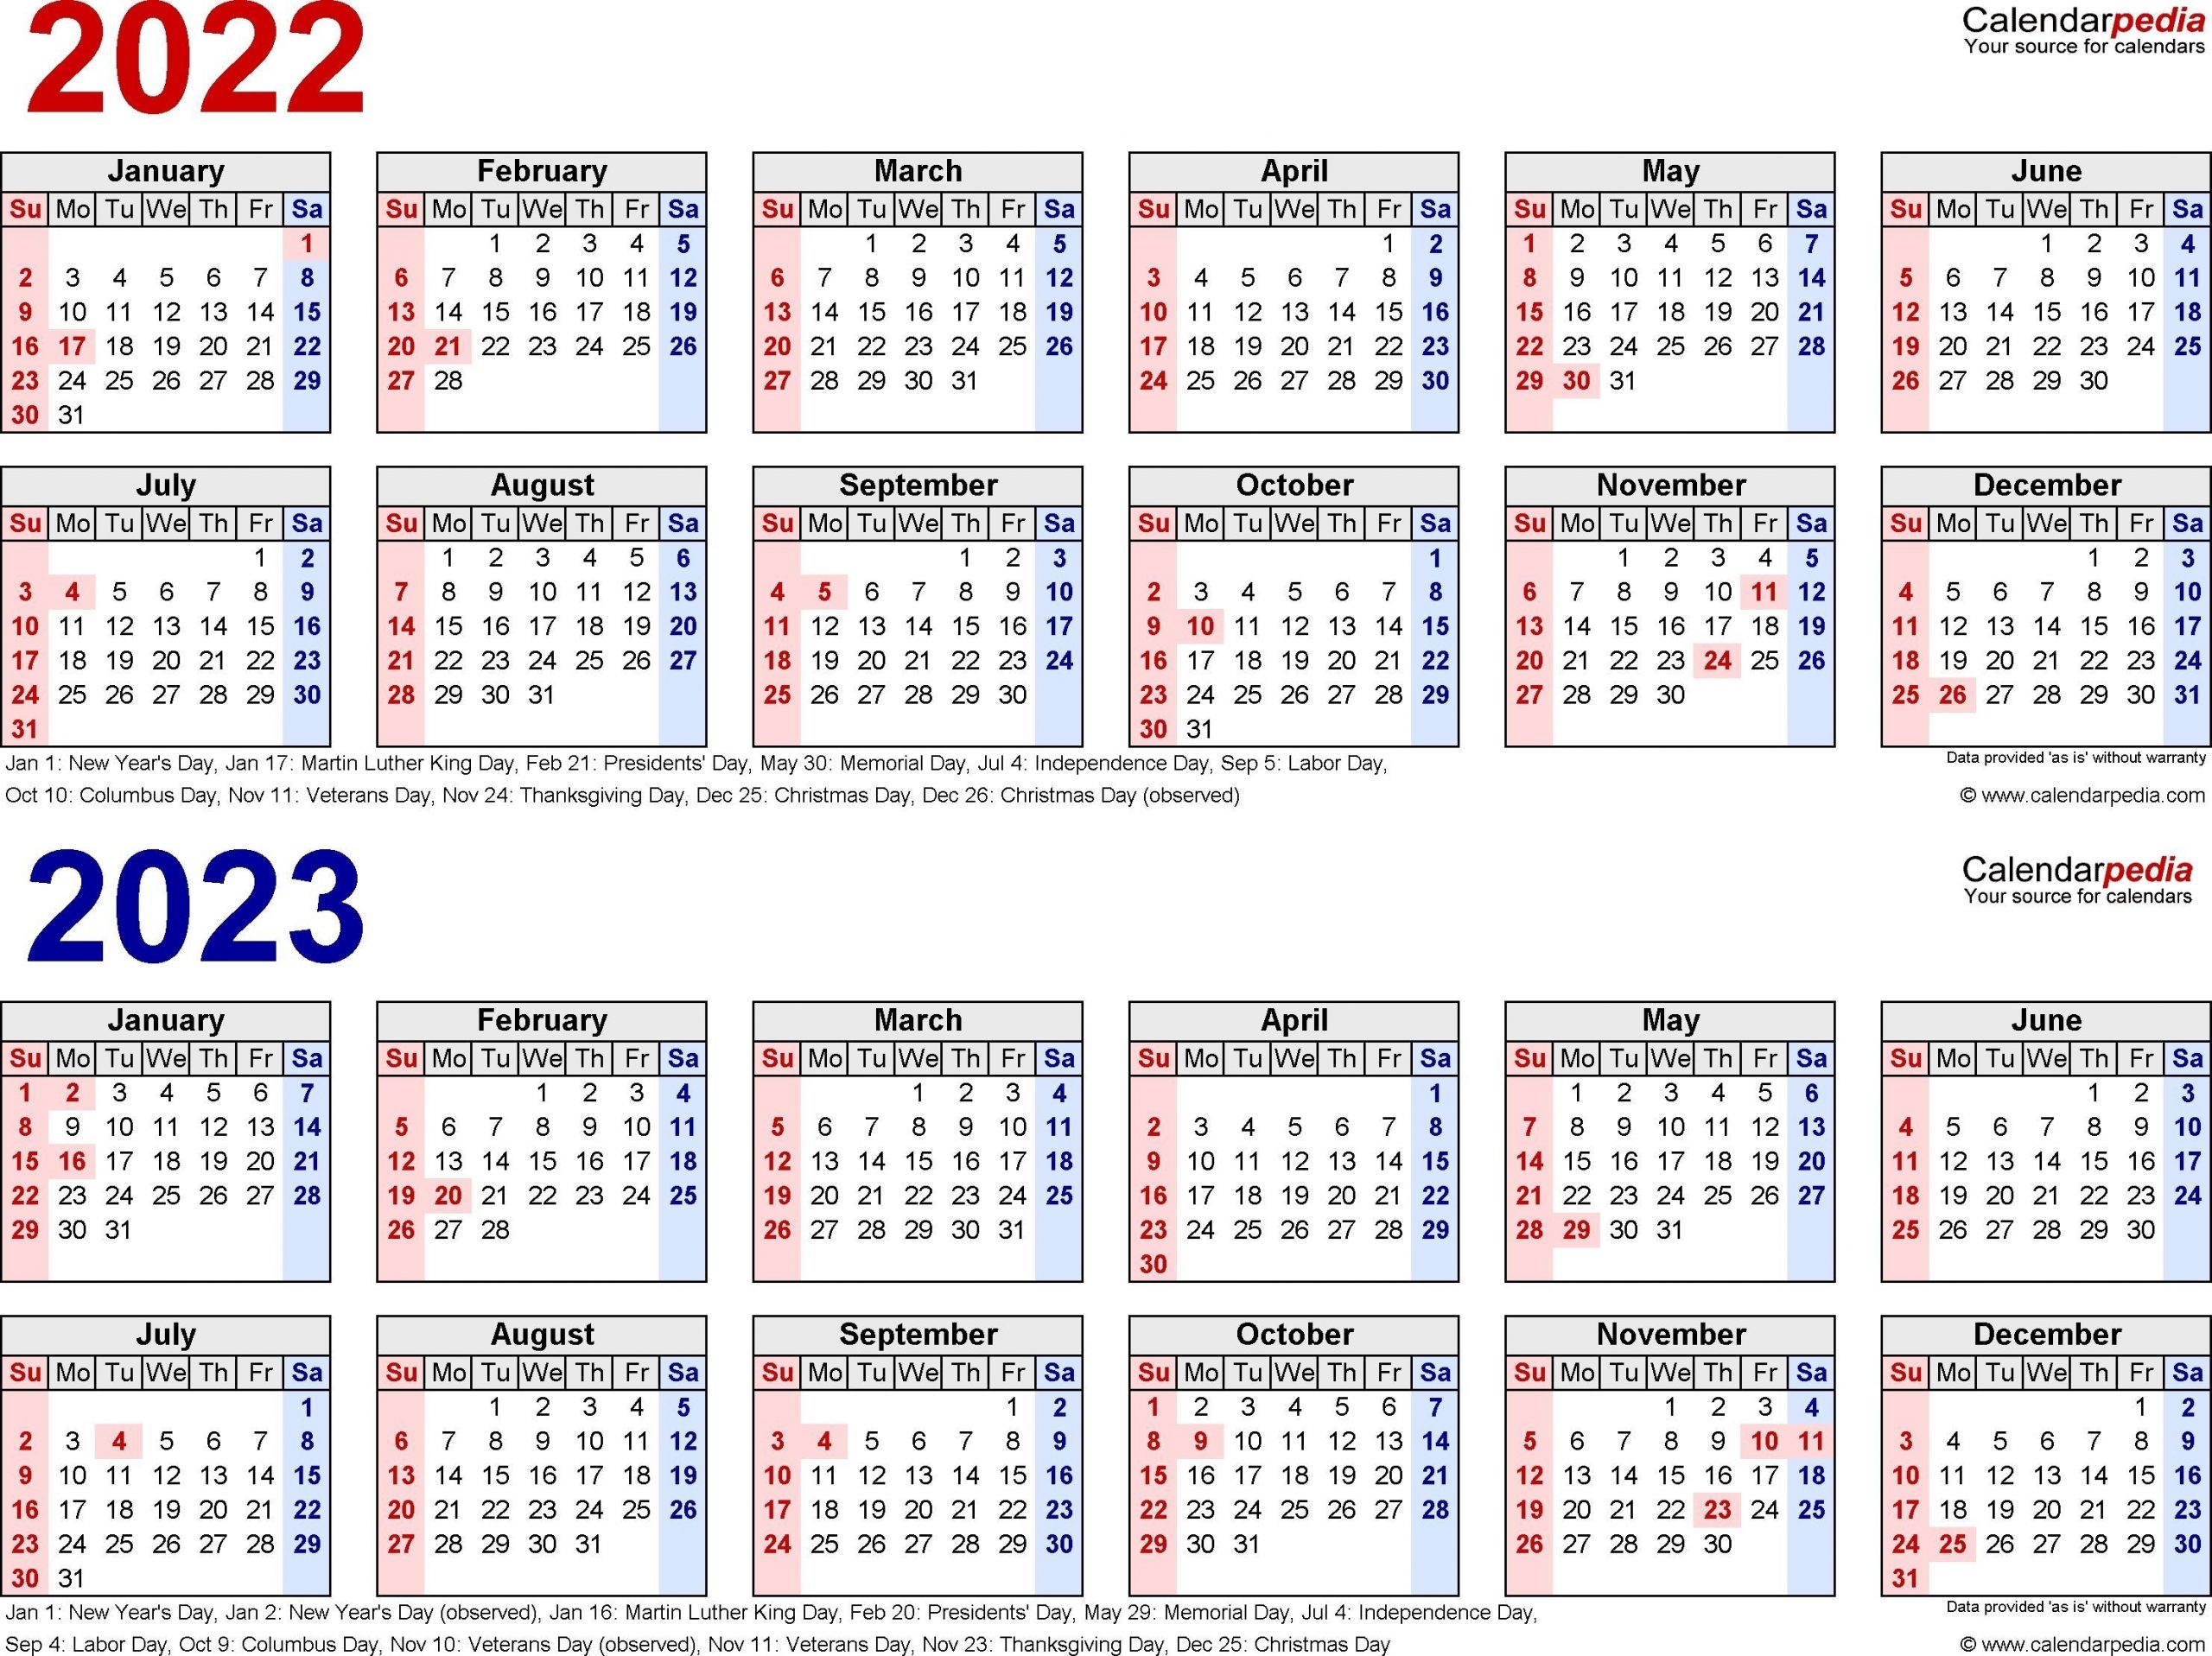 2022-2023 Calendar - Free Printable Two-Year Word